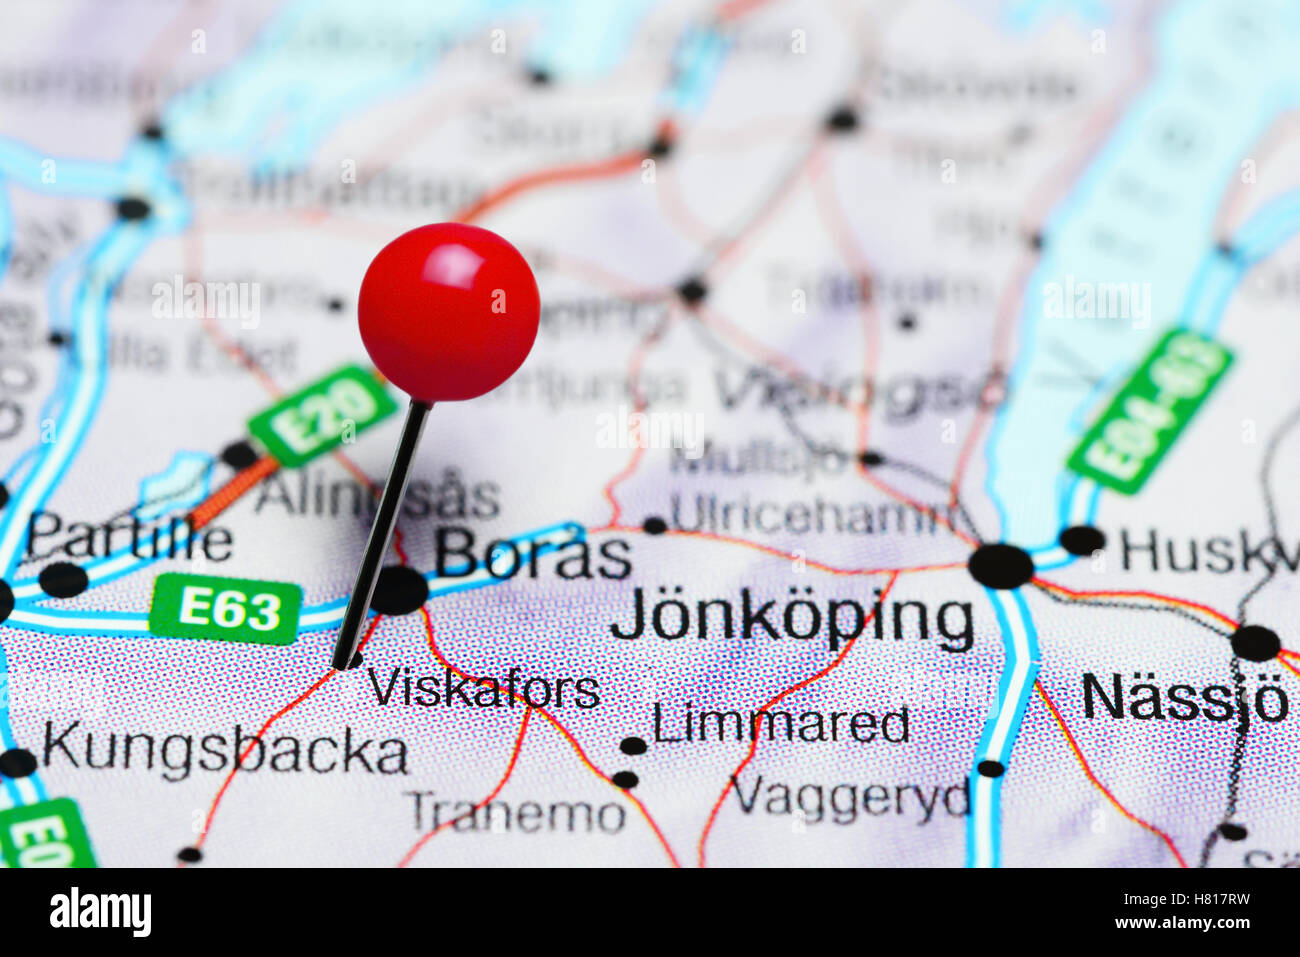 Viskafors pinned on a map of Sweden Stock Photo